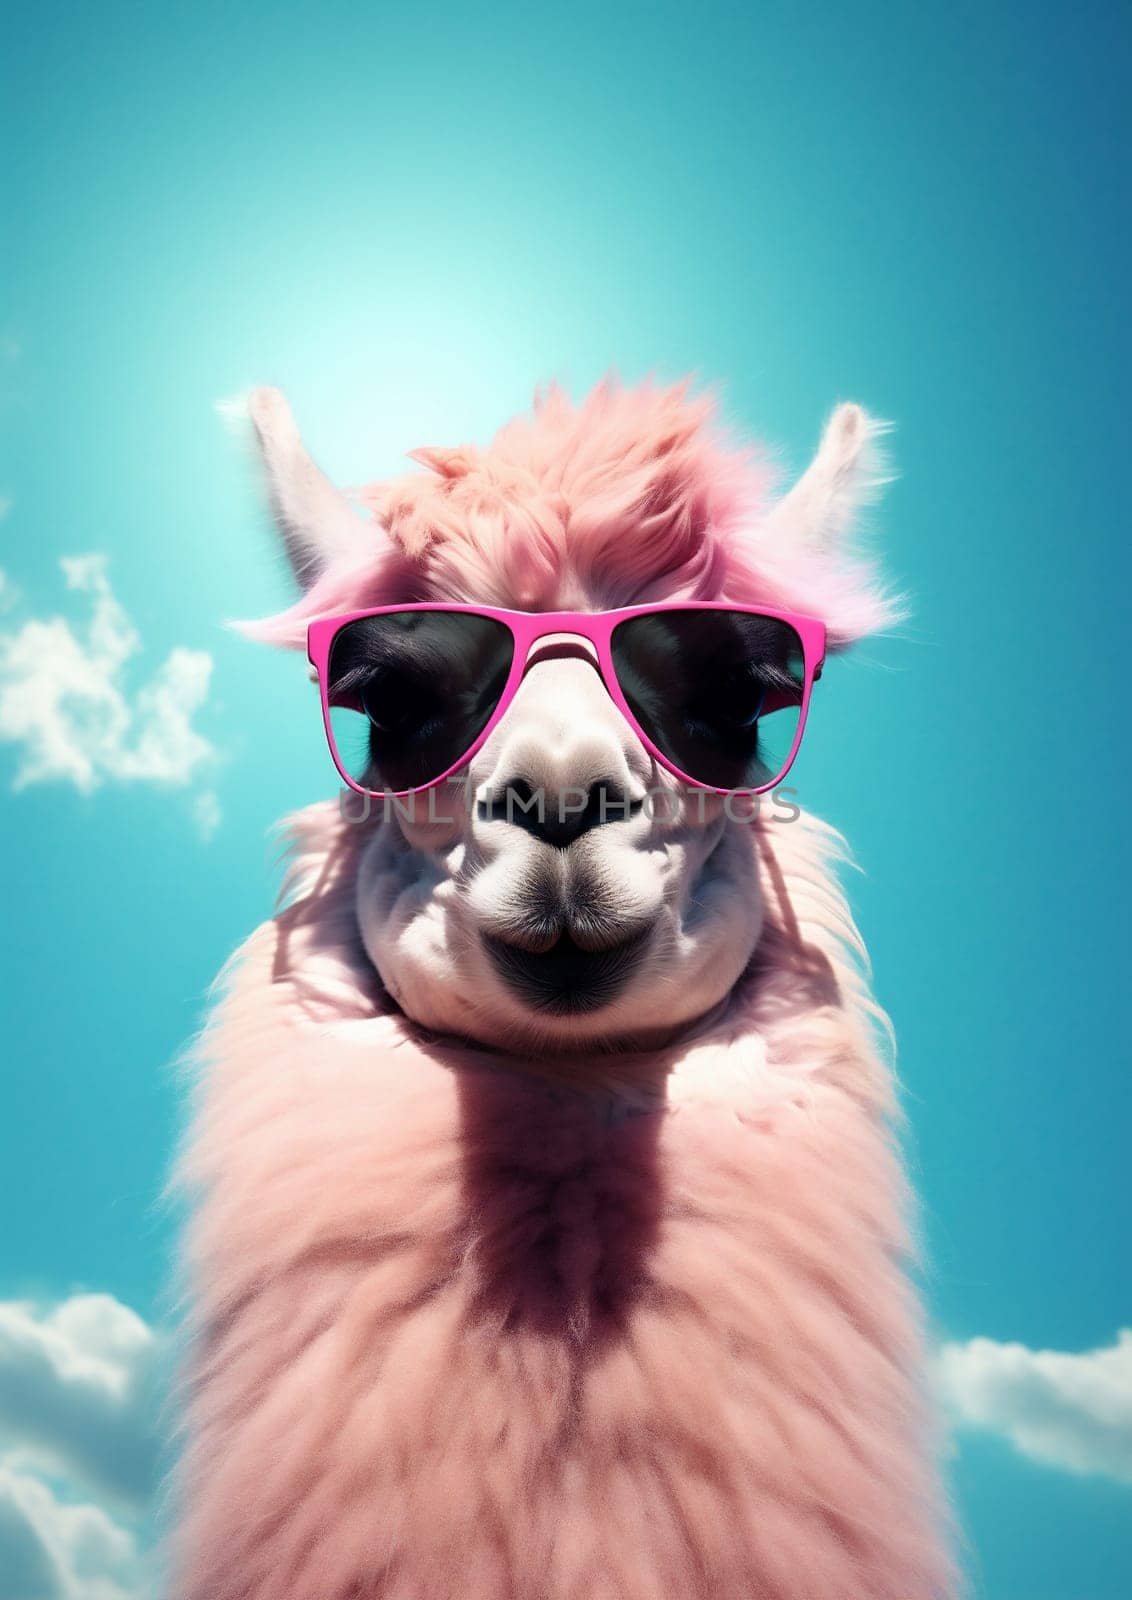 Cute stylish alpaca portrait of llama wearing glasses on blue background wearing glasses and scarf, fashion